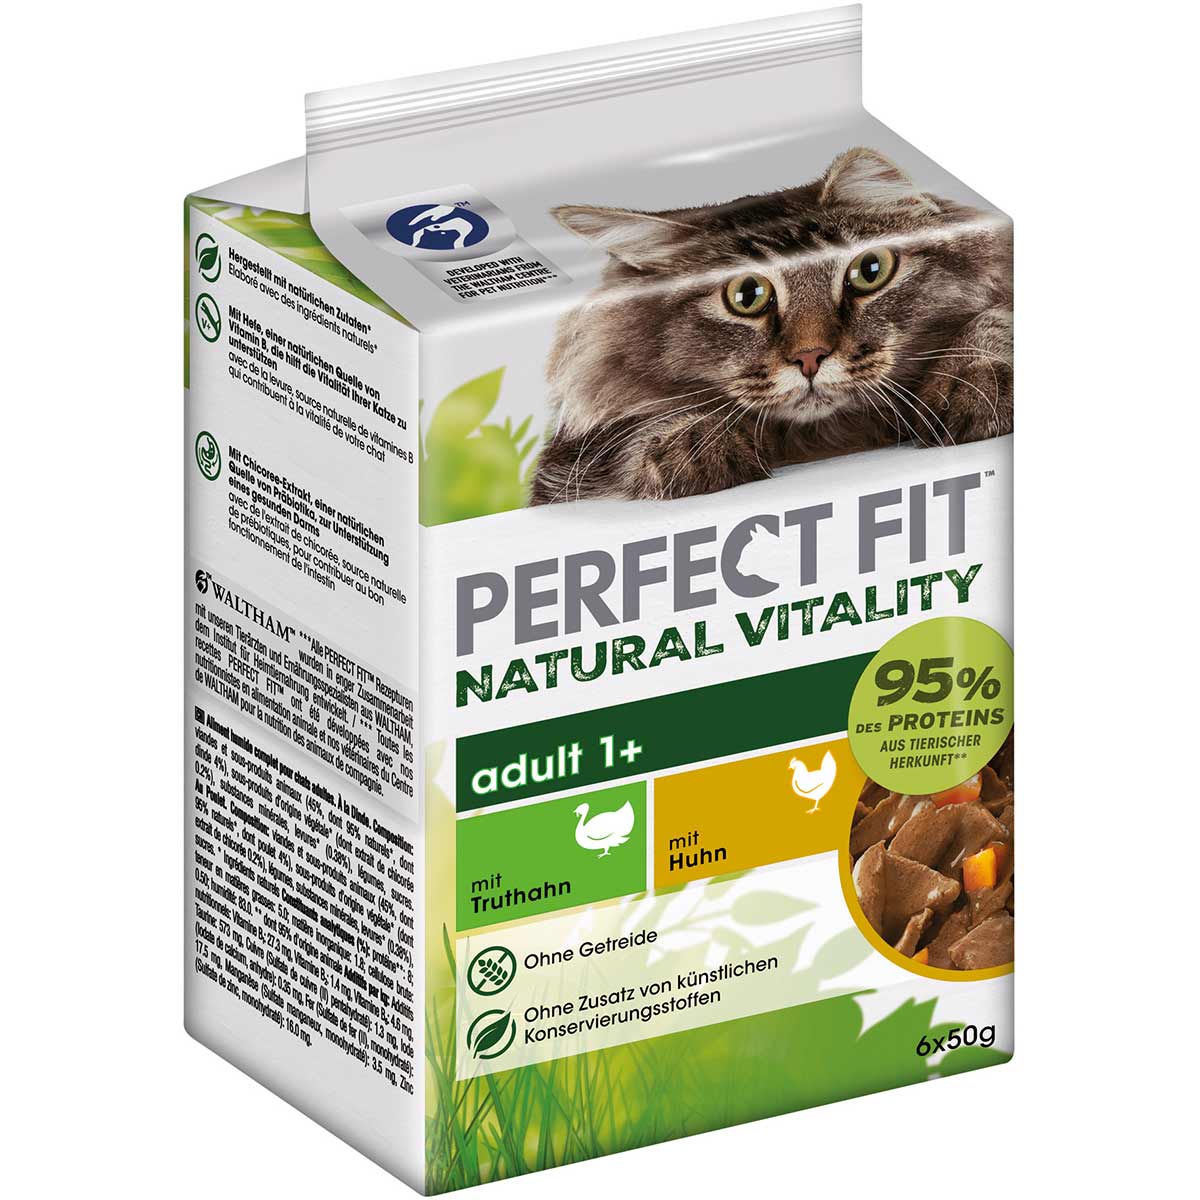 PERFECT FIT Katze Natural Vitality Adult 1+ mit Truthahn und Huhn 36x50g